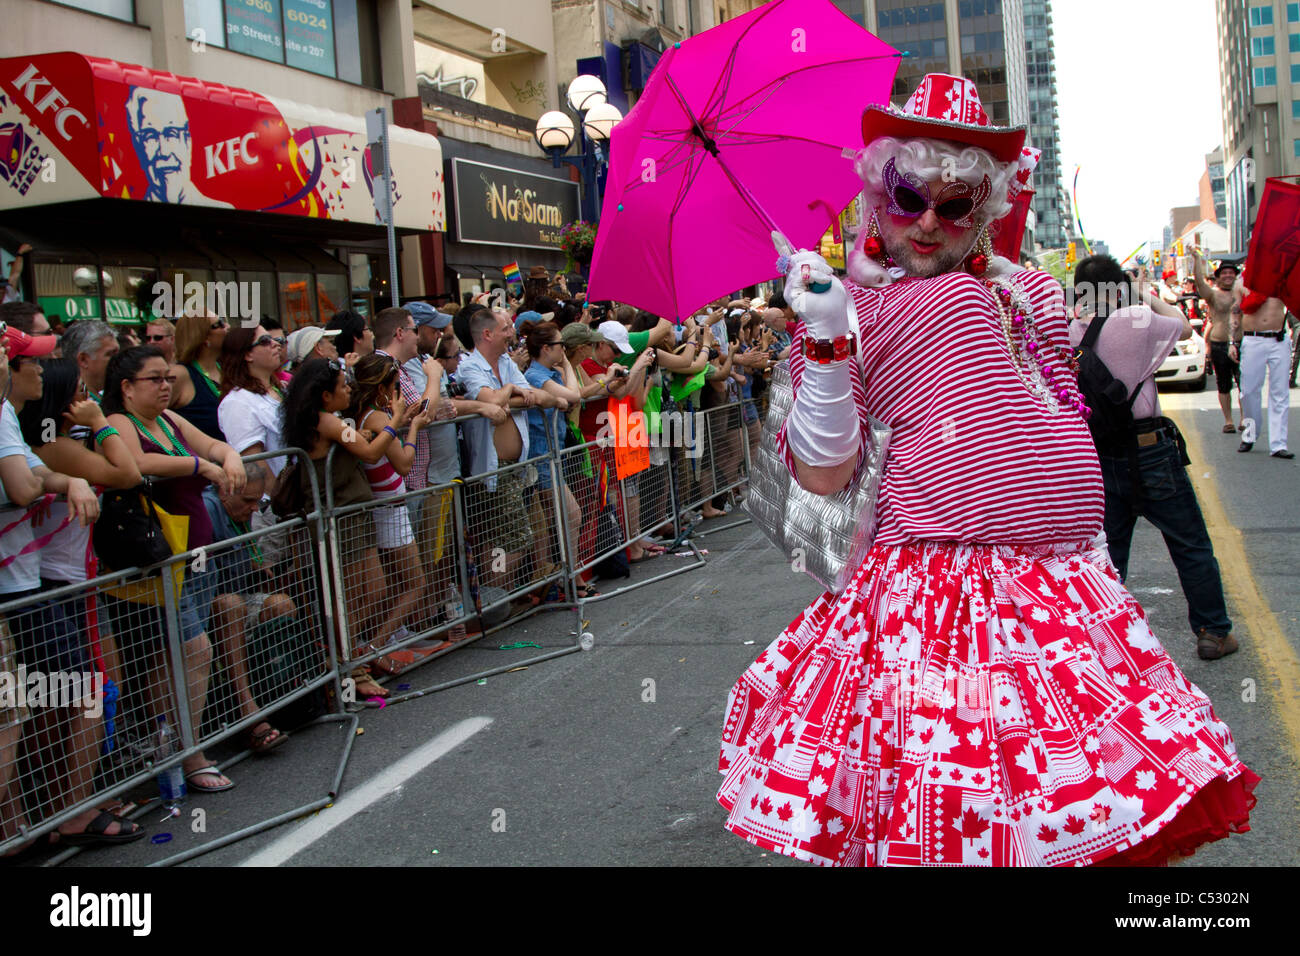 'cross dresser' 'drag queen' pride parade Stock Photo